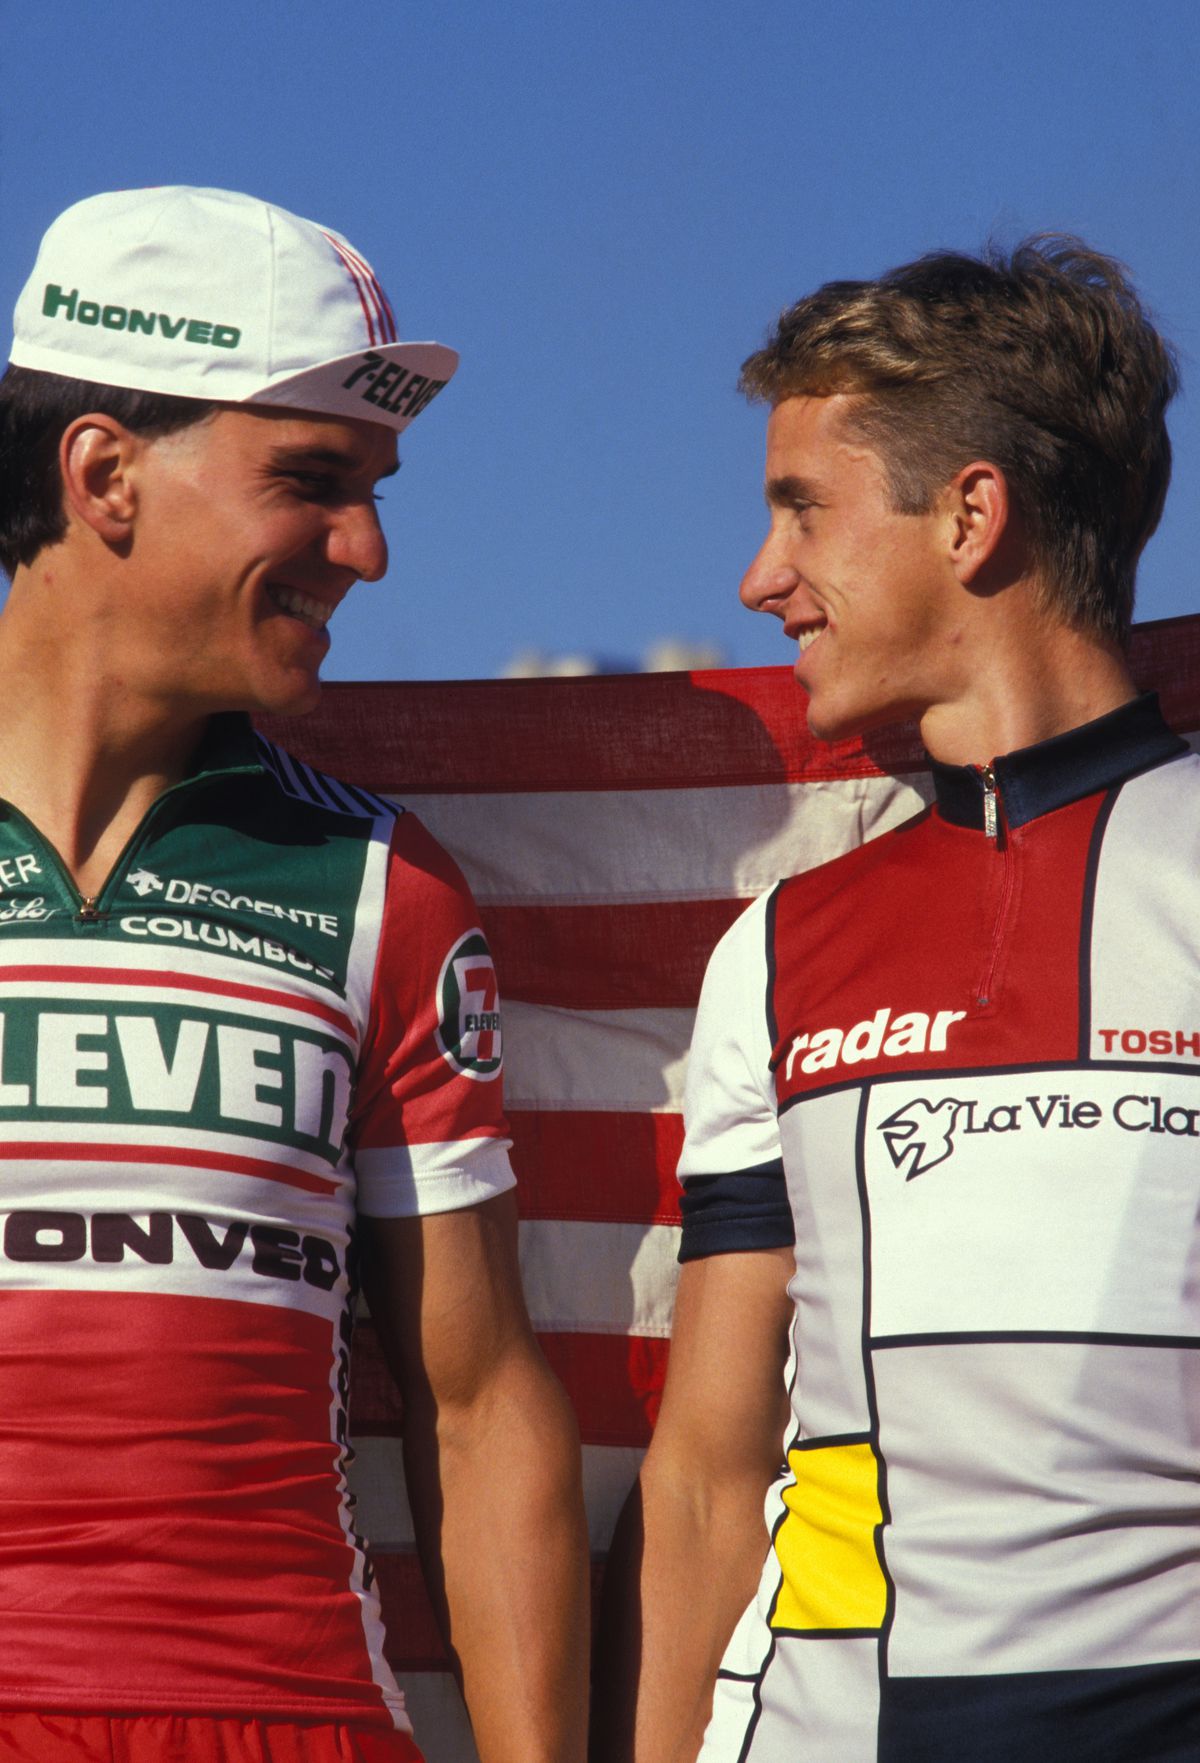 1986 7-Eleven Davis Phinney Pro-Band Retro Cycling Kit